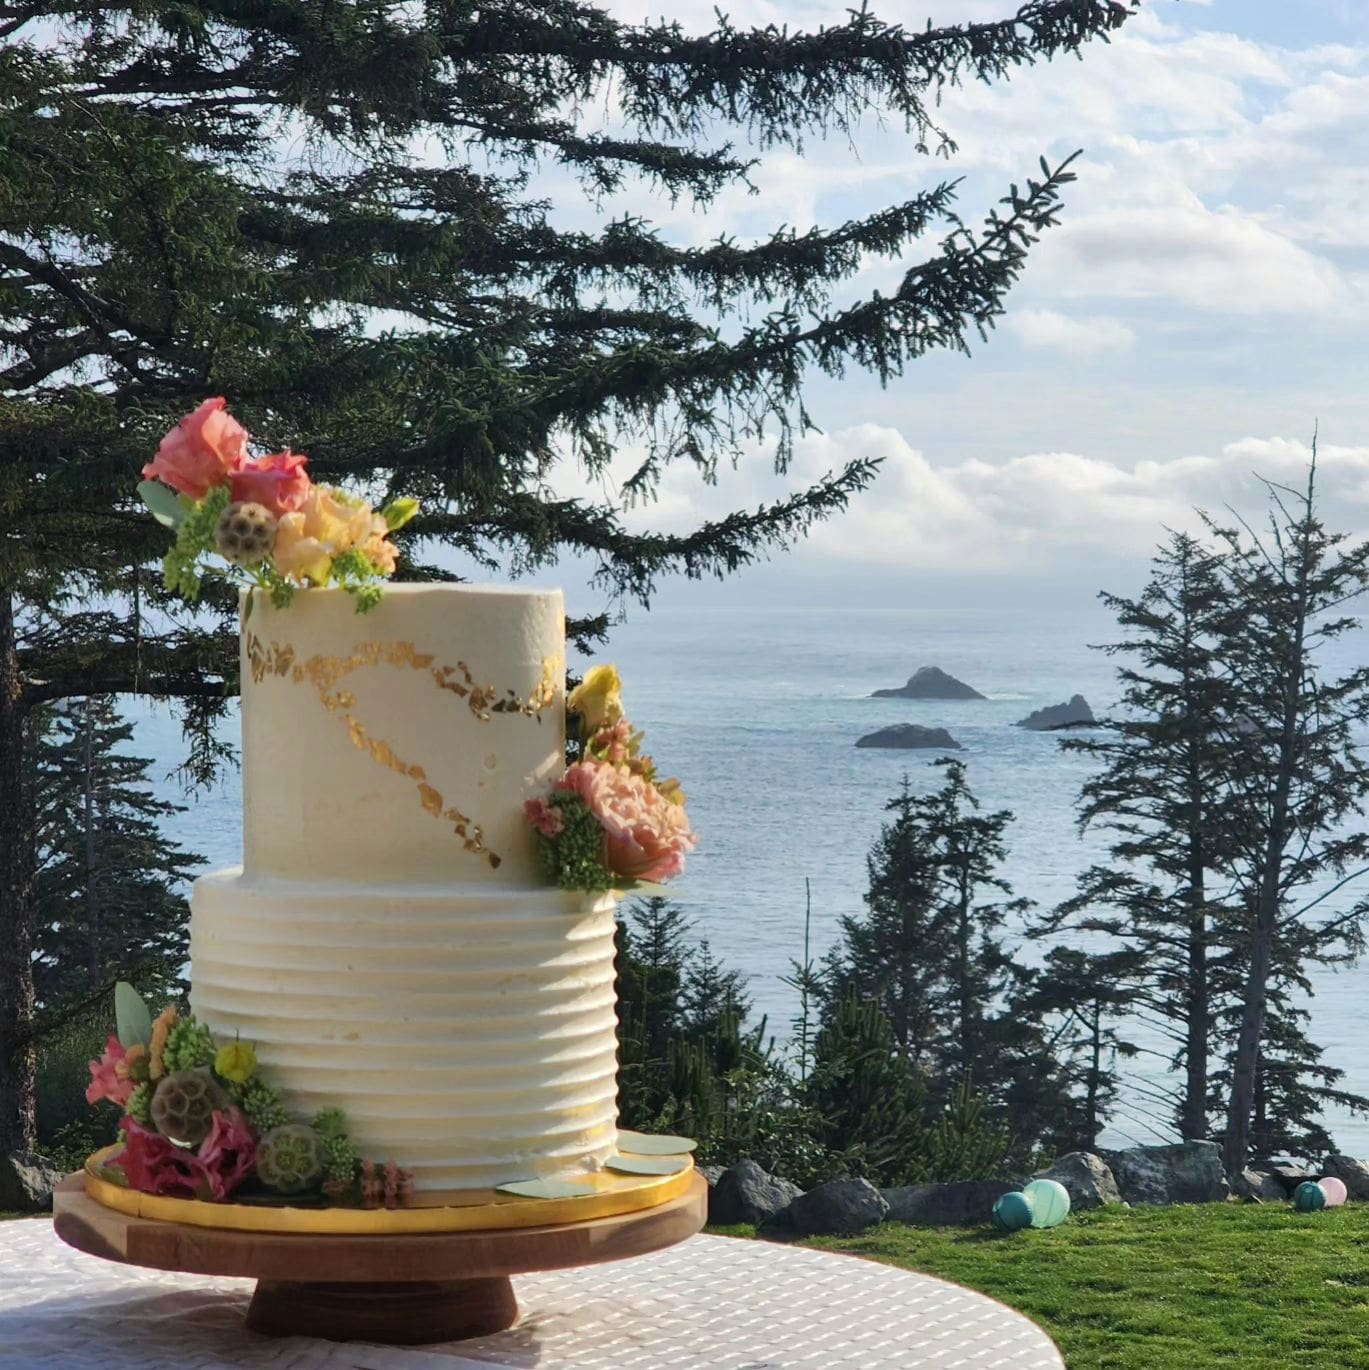 PNW Weddings Excellence Awards 2022 Nominee Honey Crumb Cake Studio Seattle, WA Photo By Carol Harrold Photography